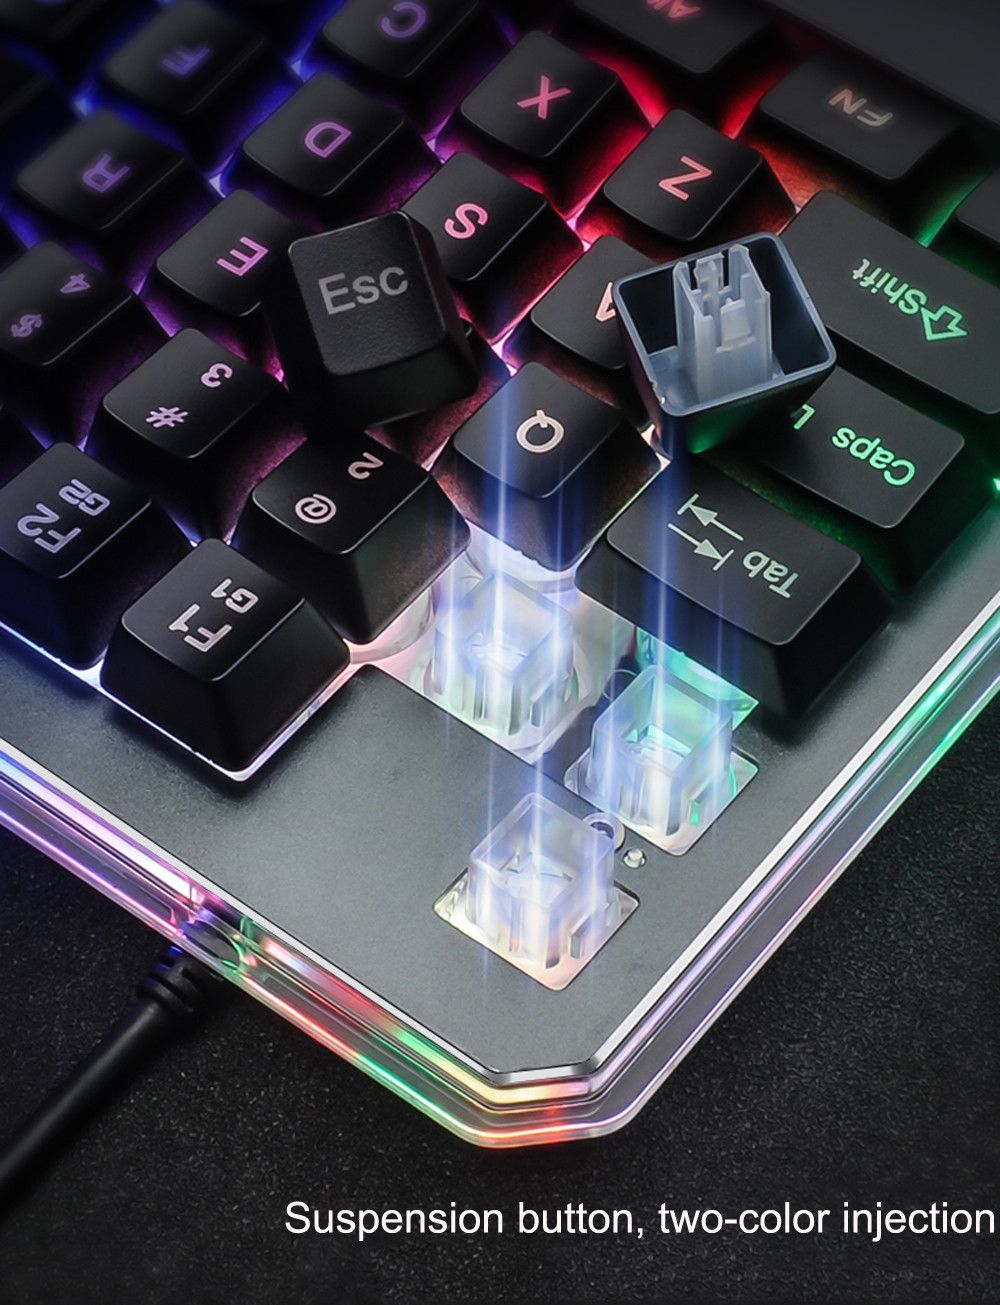 G40-35-Keys-RGB-LED-Backlight-One-Handed-Mechanical-Gaming-Keyboard-for-PC-Laptop-1665731